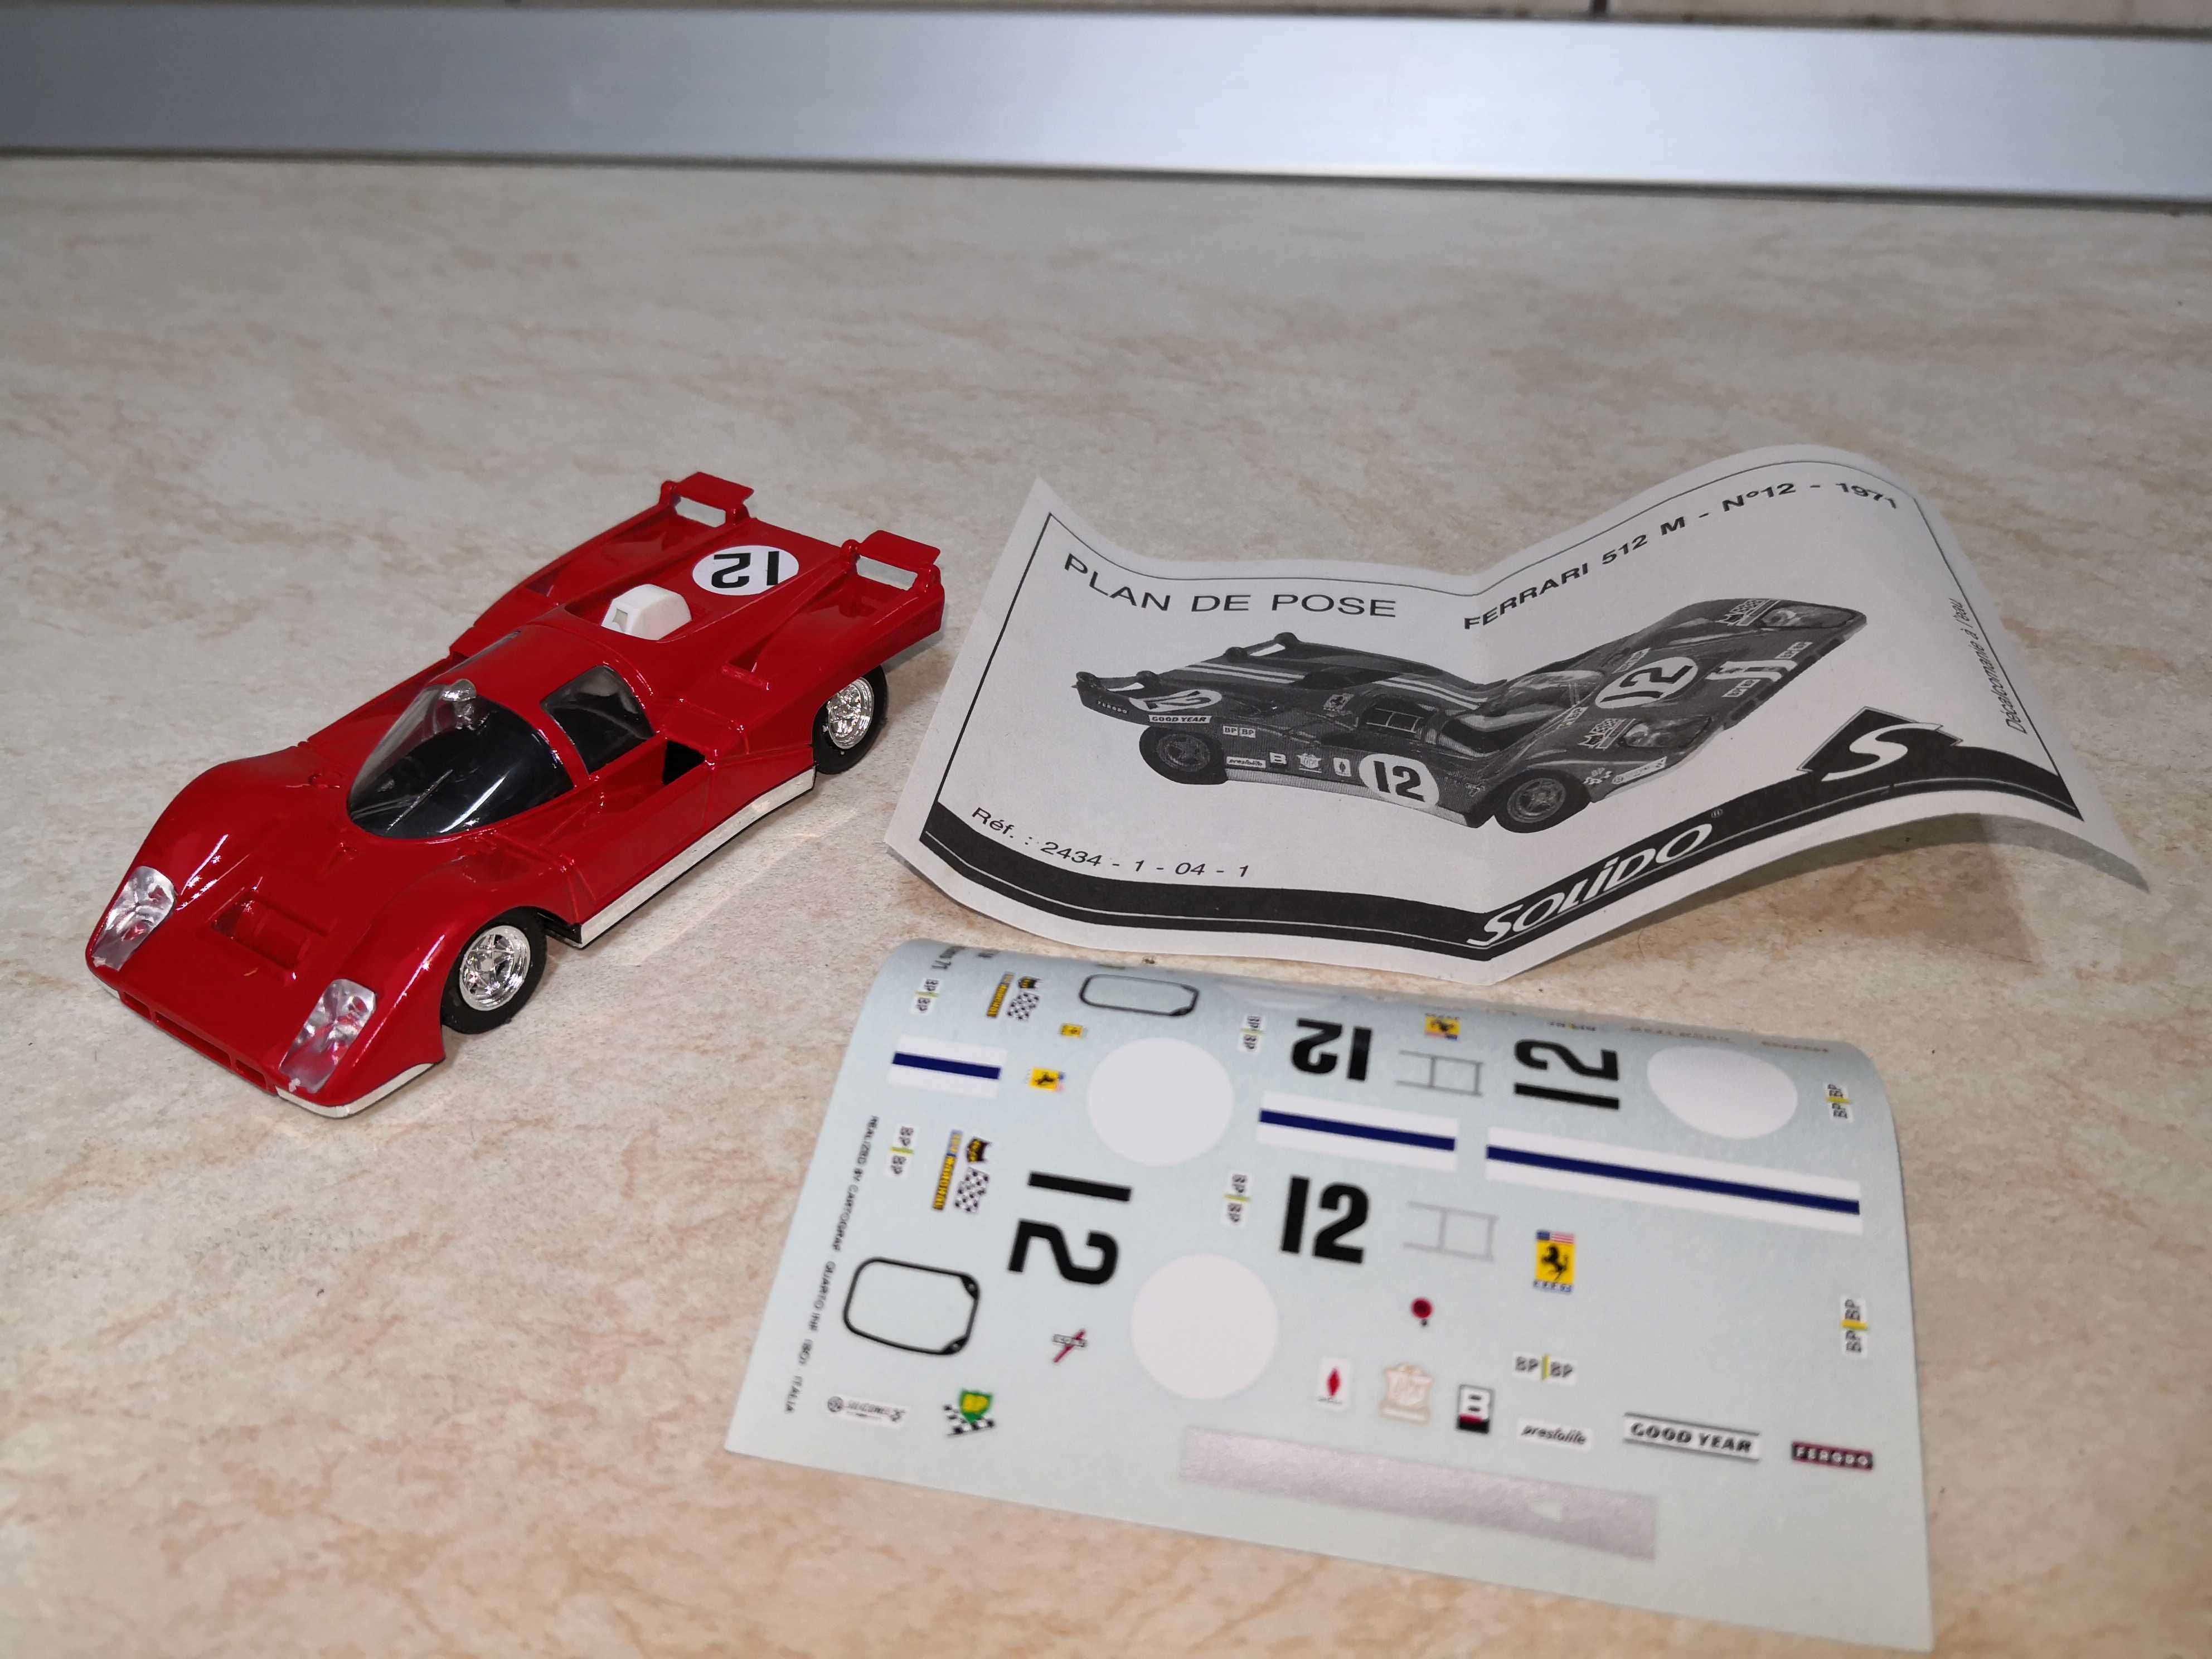 Macheta Ferrari 512 M Le Mans, scara 1:43, producator Solido